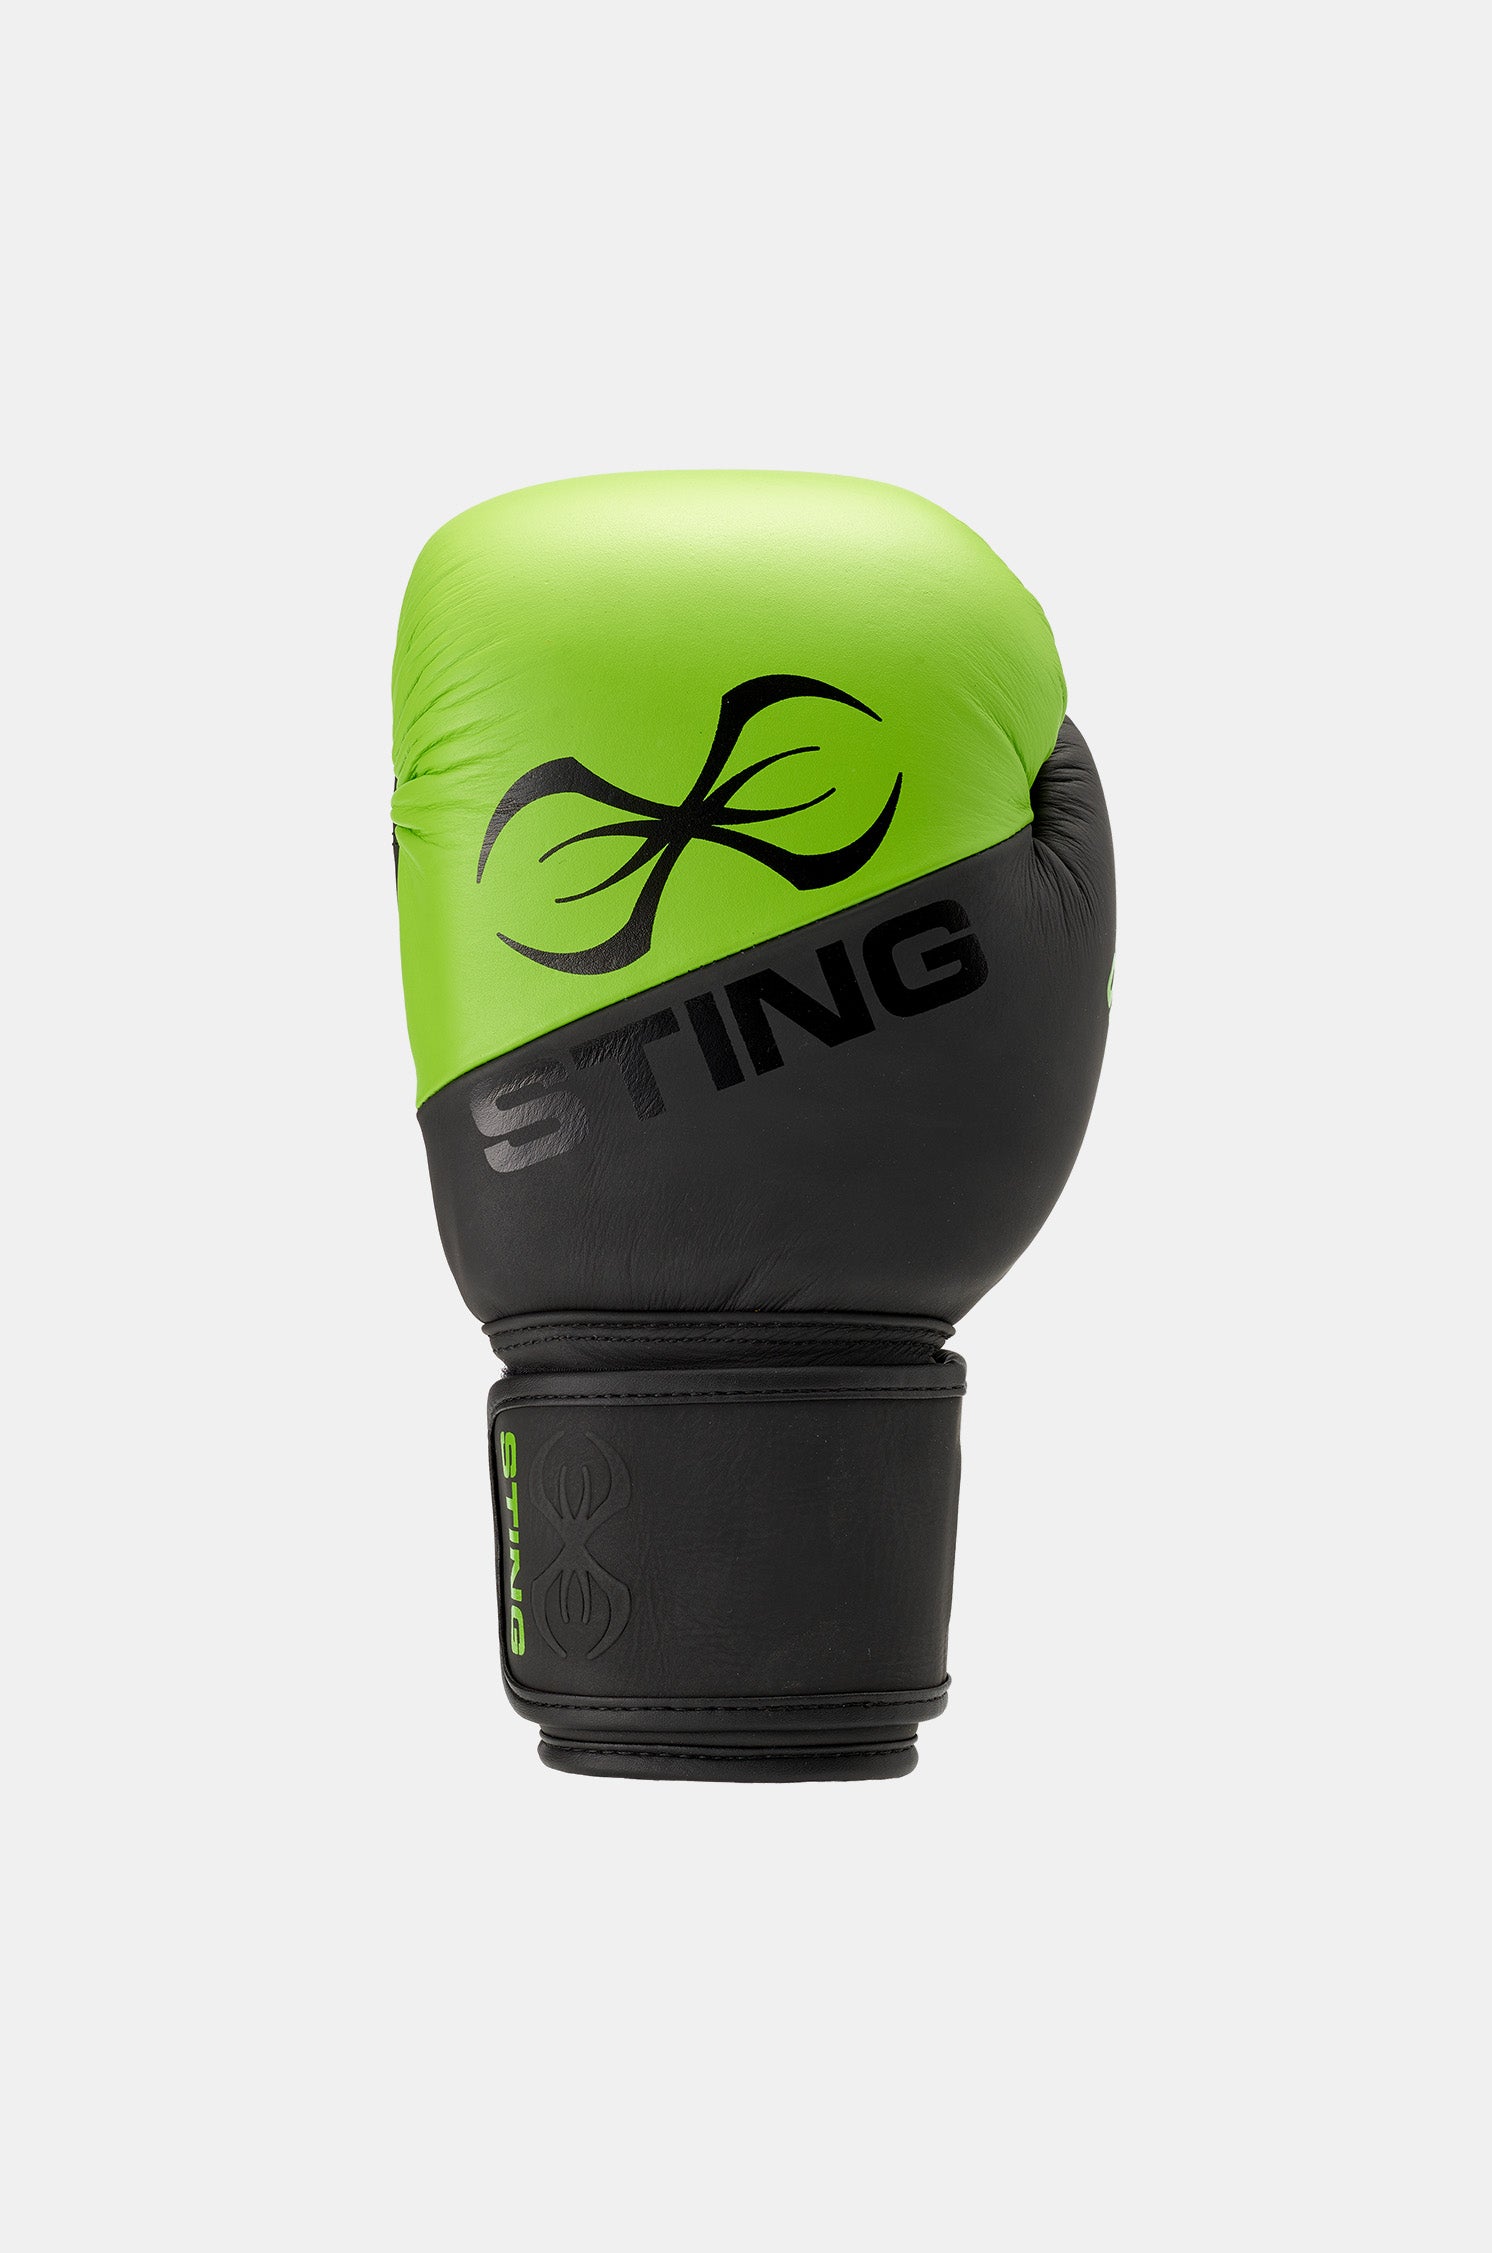 STING Orion Boxing Gloves Black Green